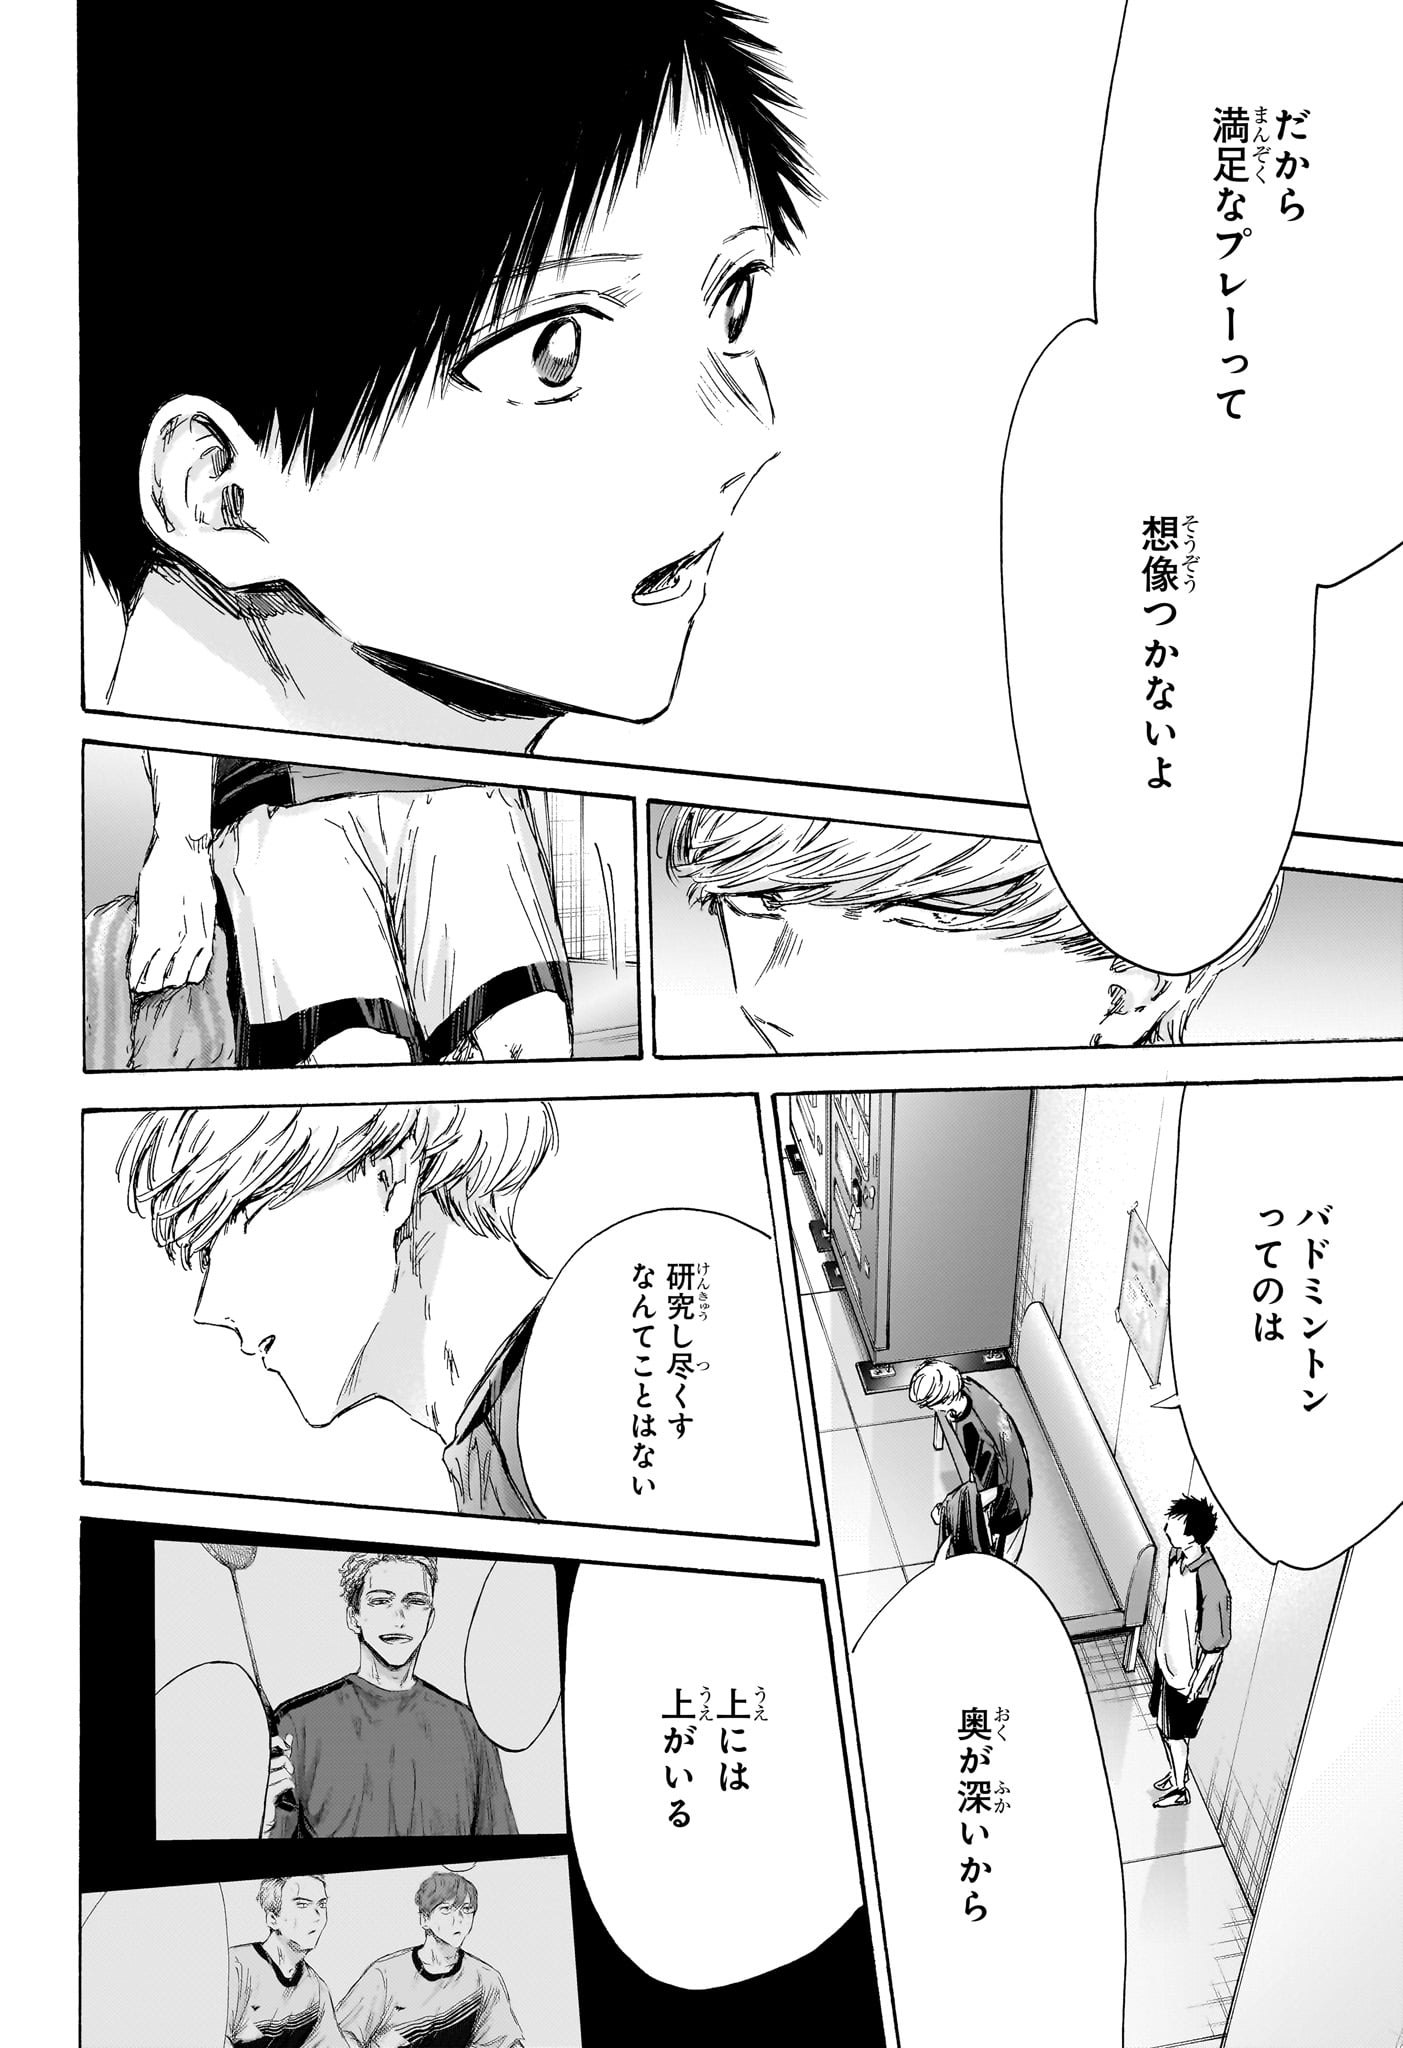 Ao no Hako - Chapter 155 - Page 4